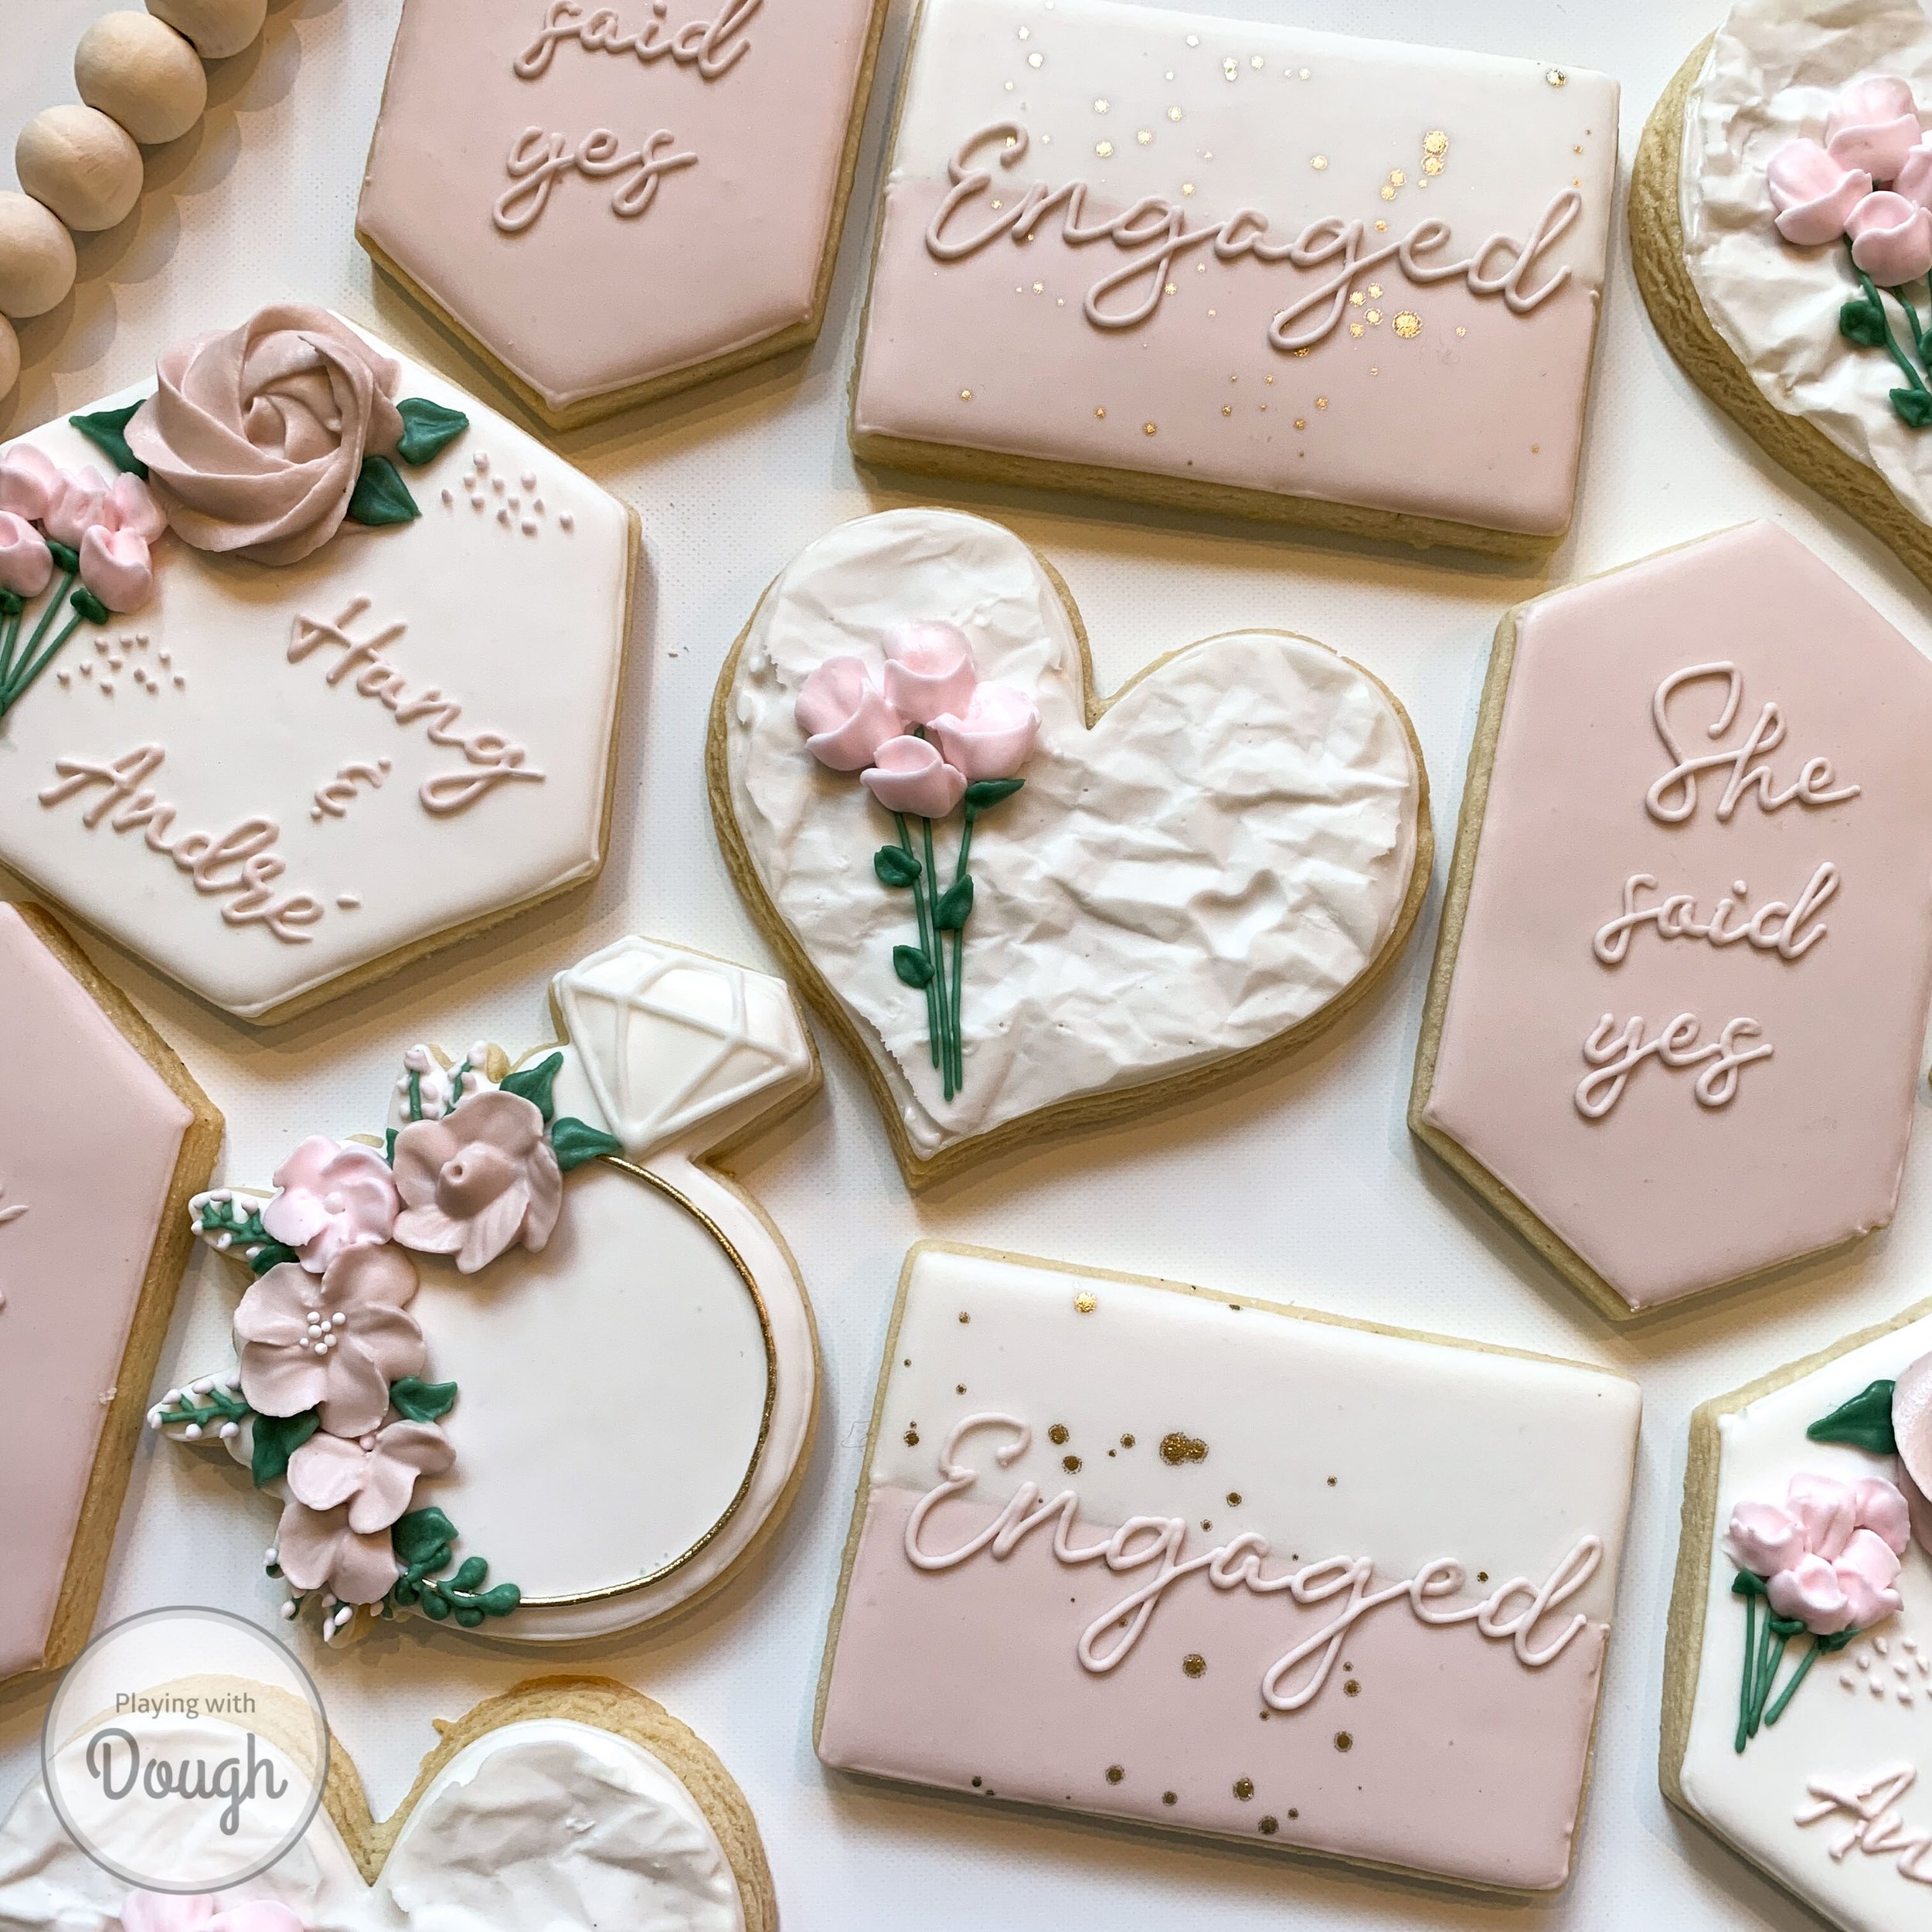 Pin on Cookies: Wedding